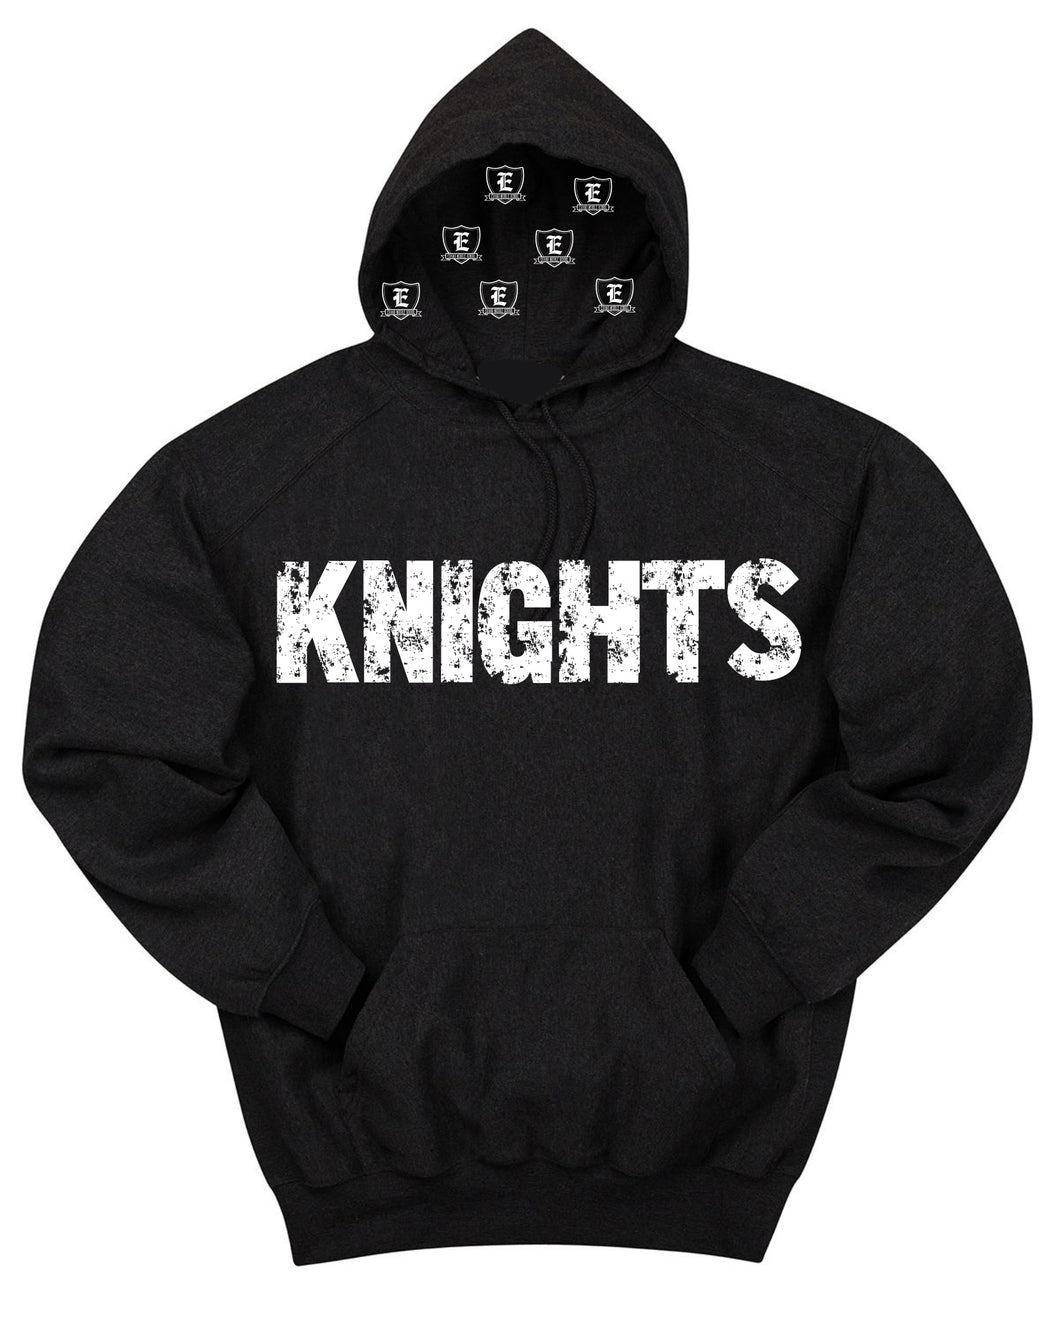 Knights Hoodie with Logo in Hood